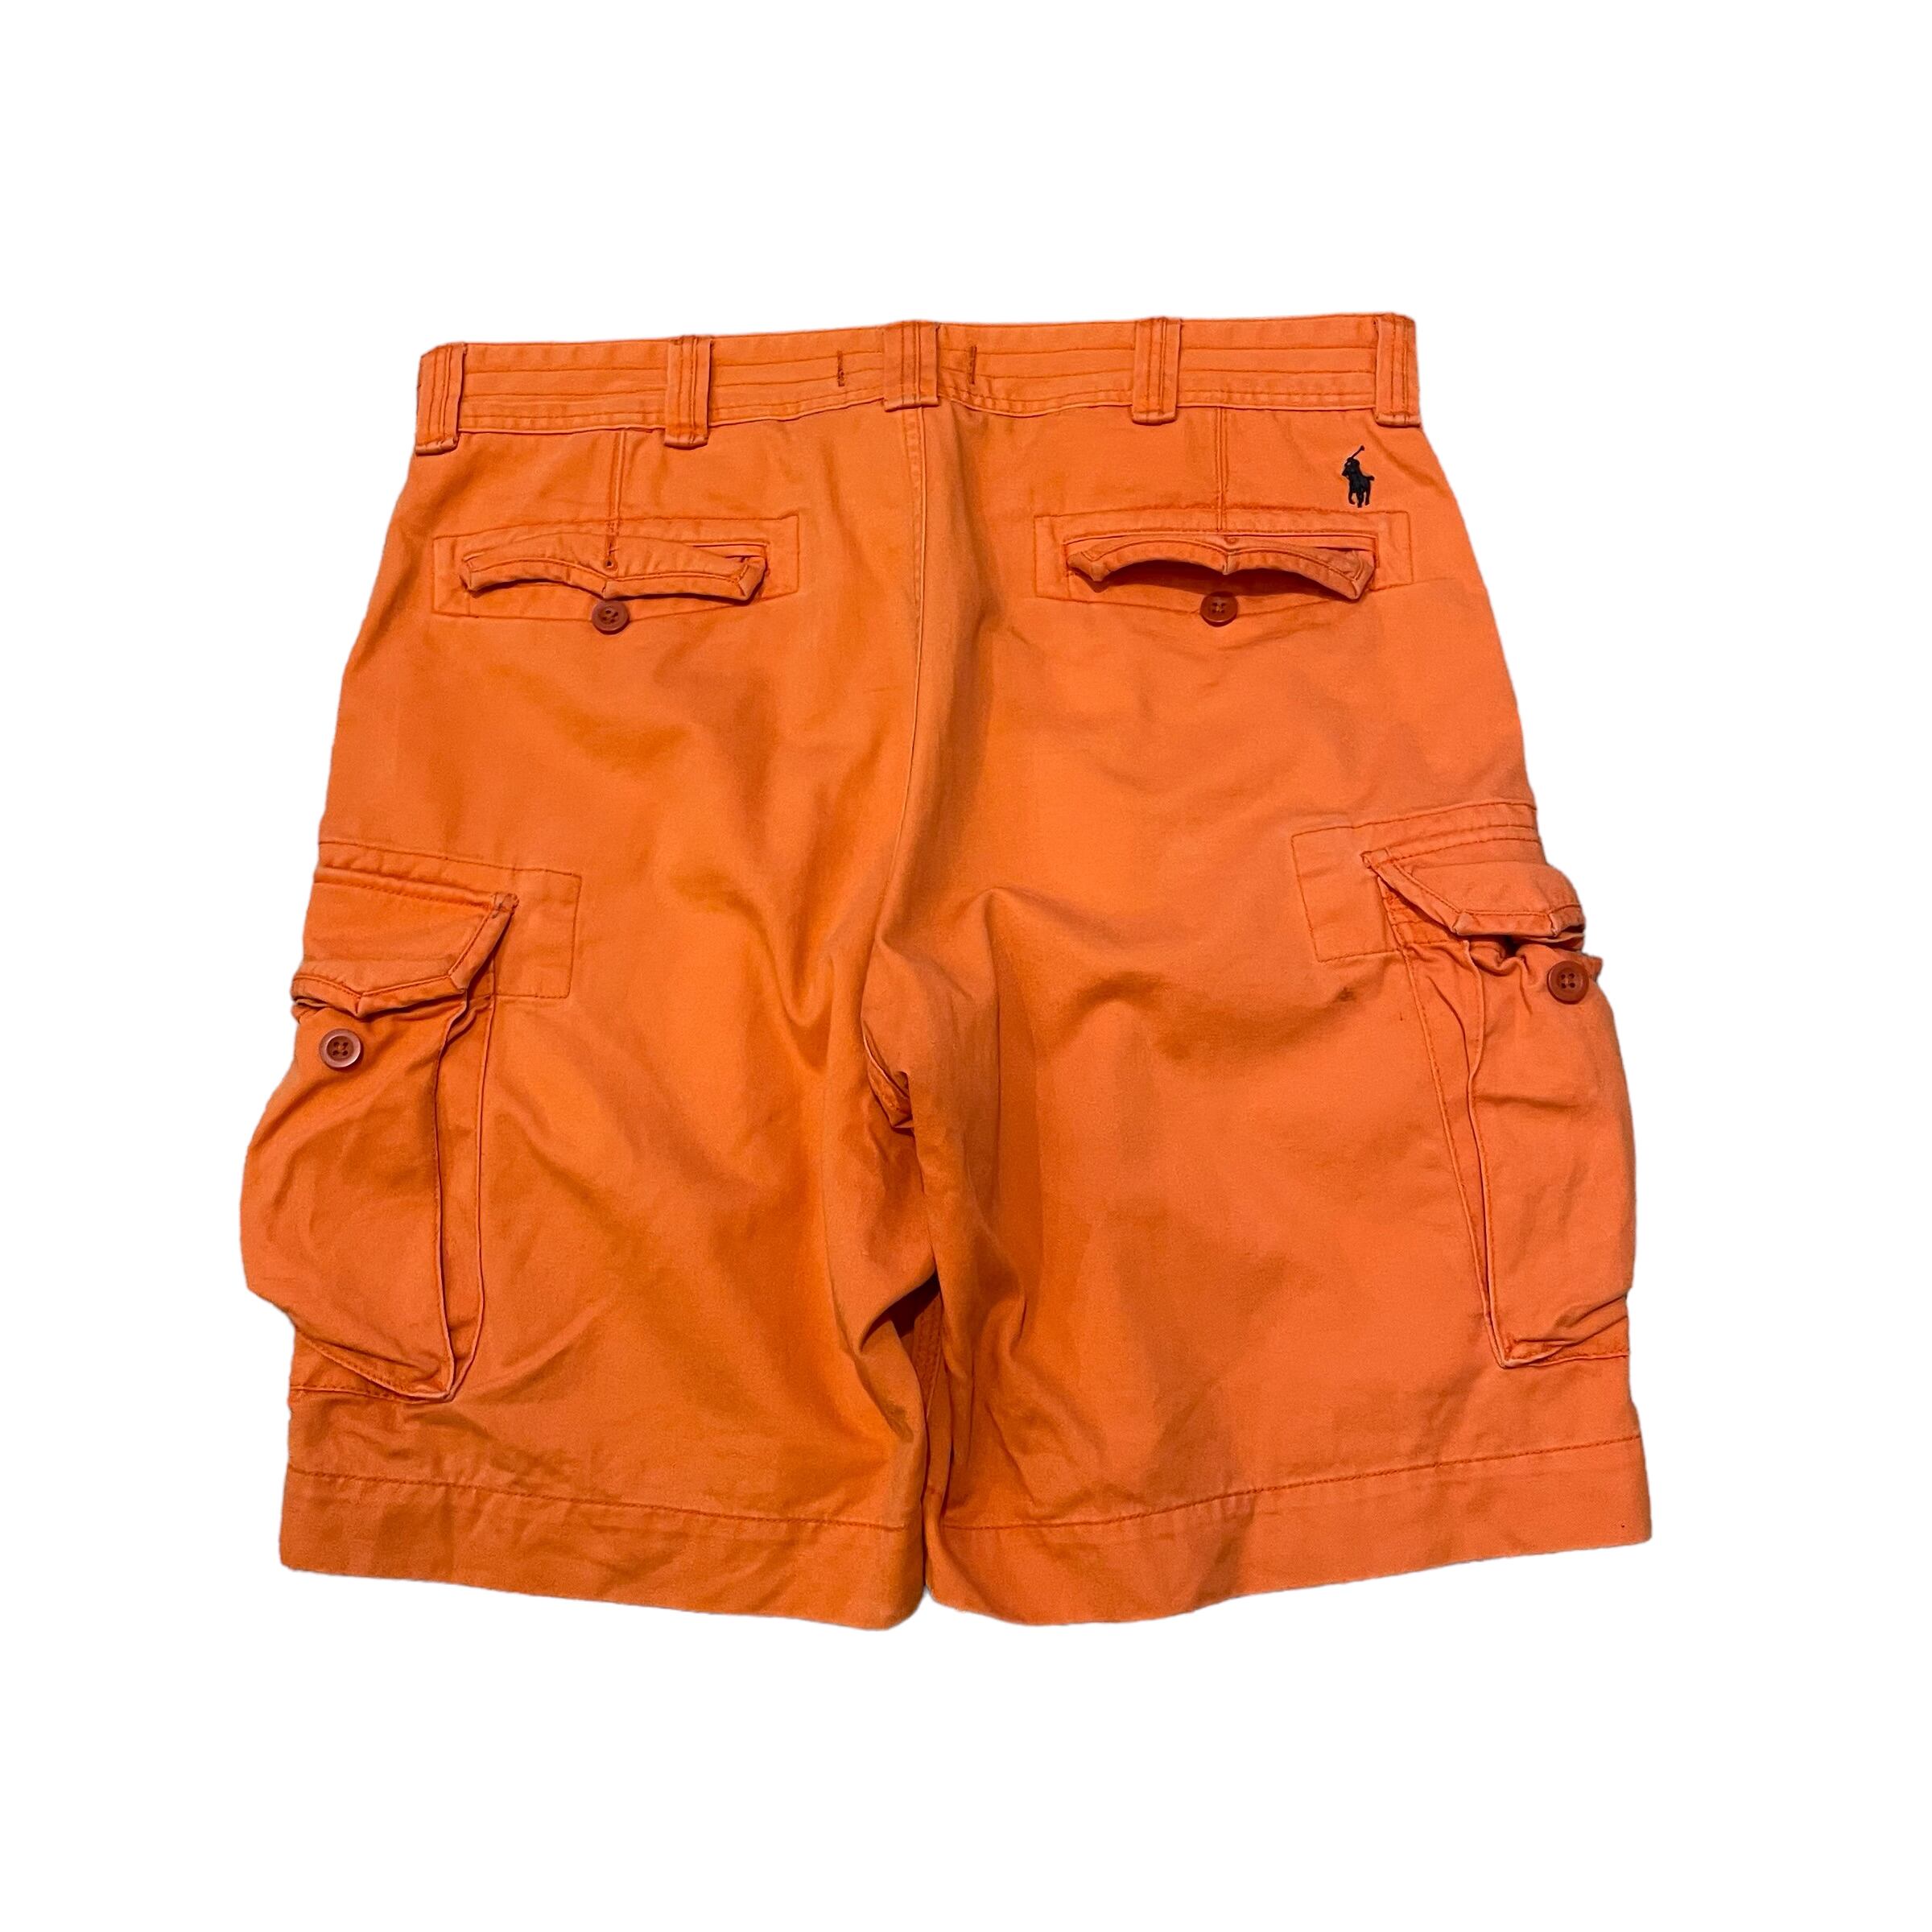 90s POLO Ralph Lauren cargo shorts | What'z up